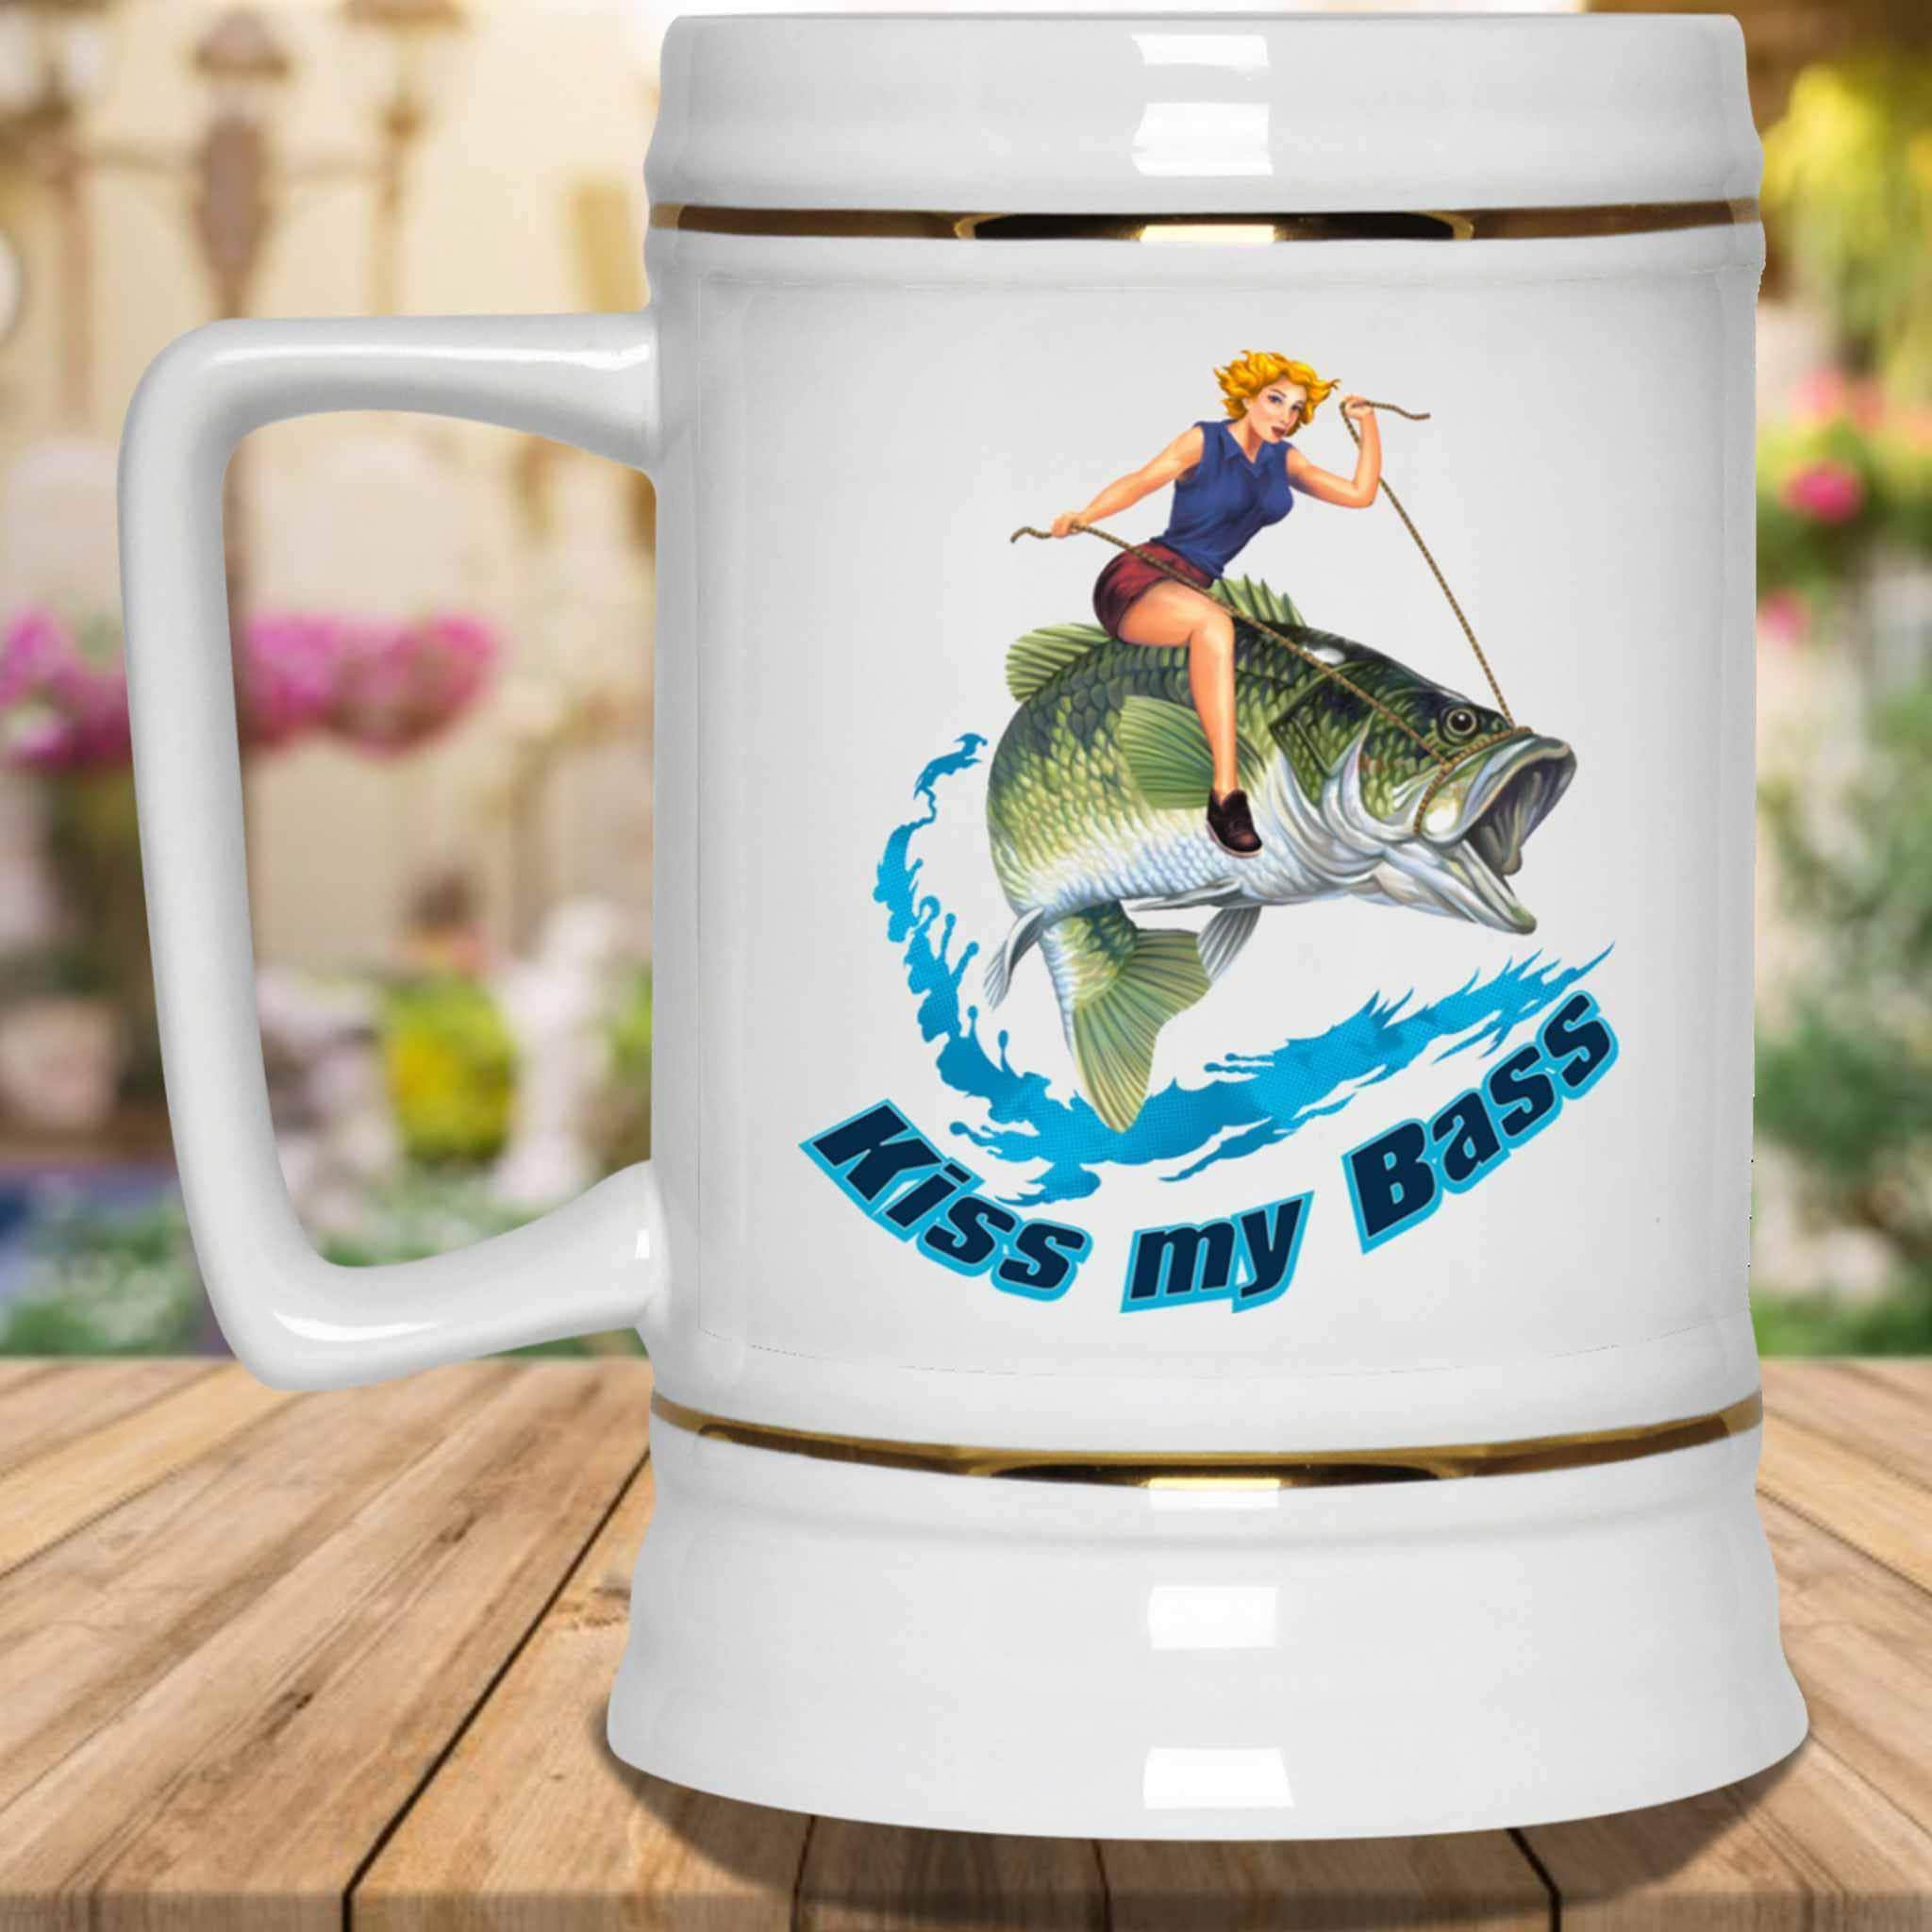 Kiss My Bass Blonde Pin Up Girl Riding A Bass Fish Fishing Themed White  Beer Mug